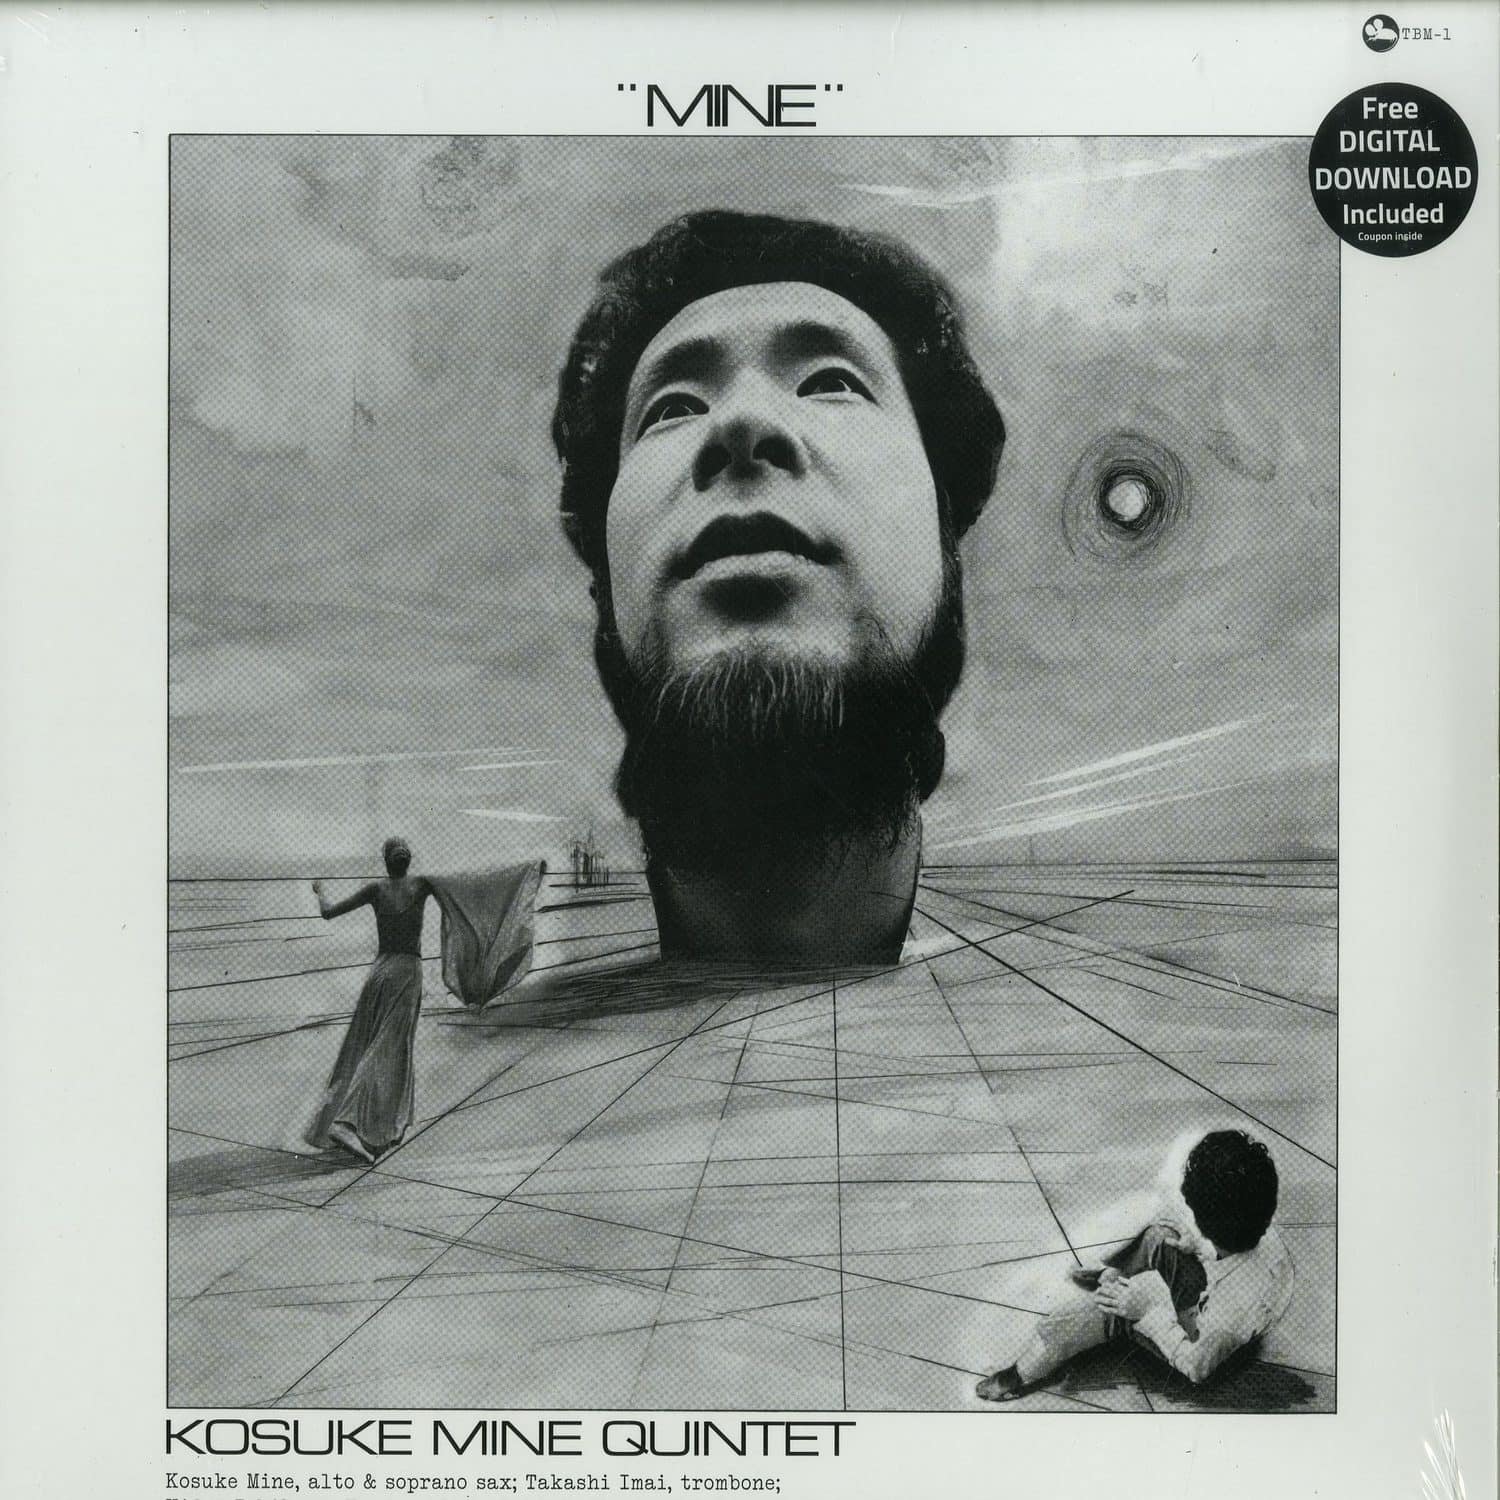 Kosuke Mine Quintet - MINE 